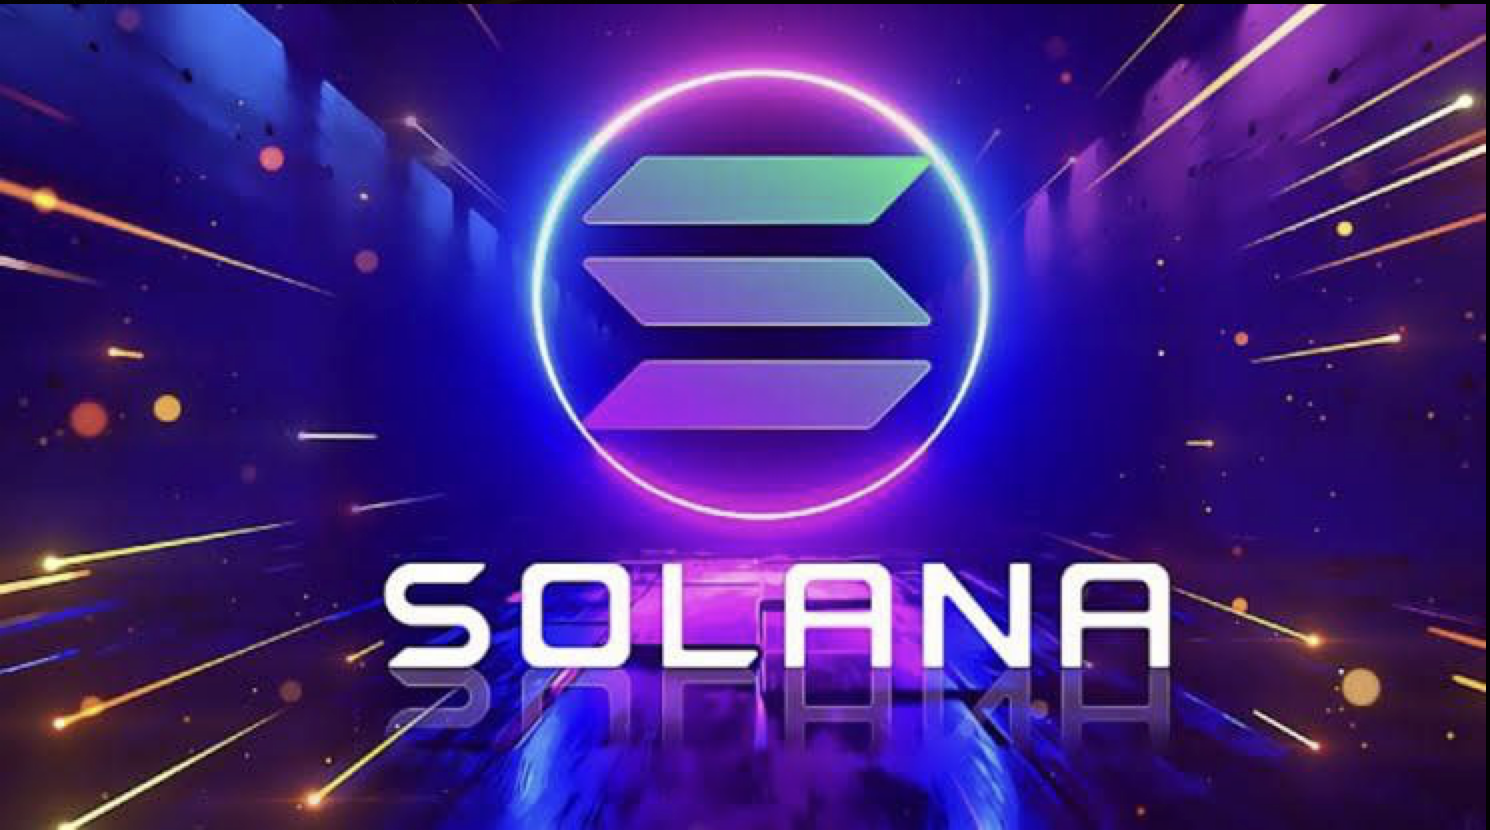 Solana logo in a futuristic way, Purple and blue gradient